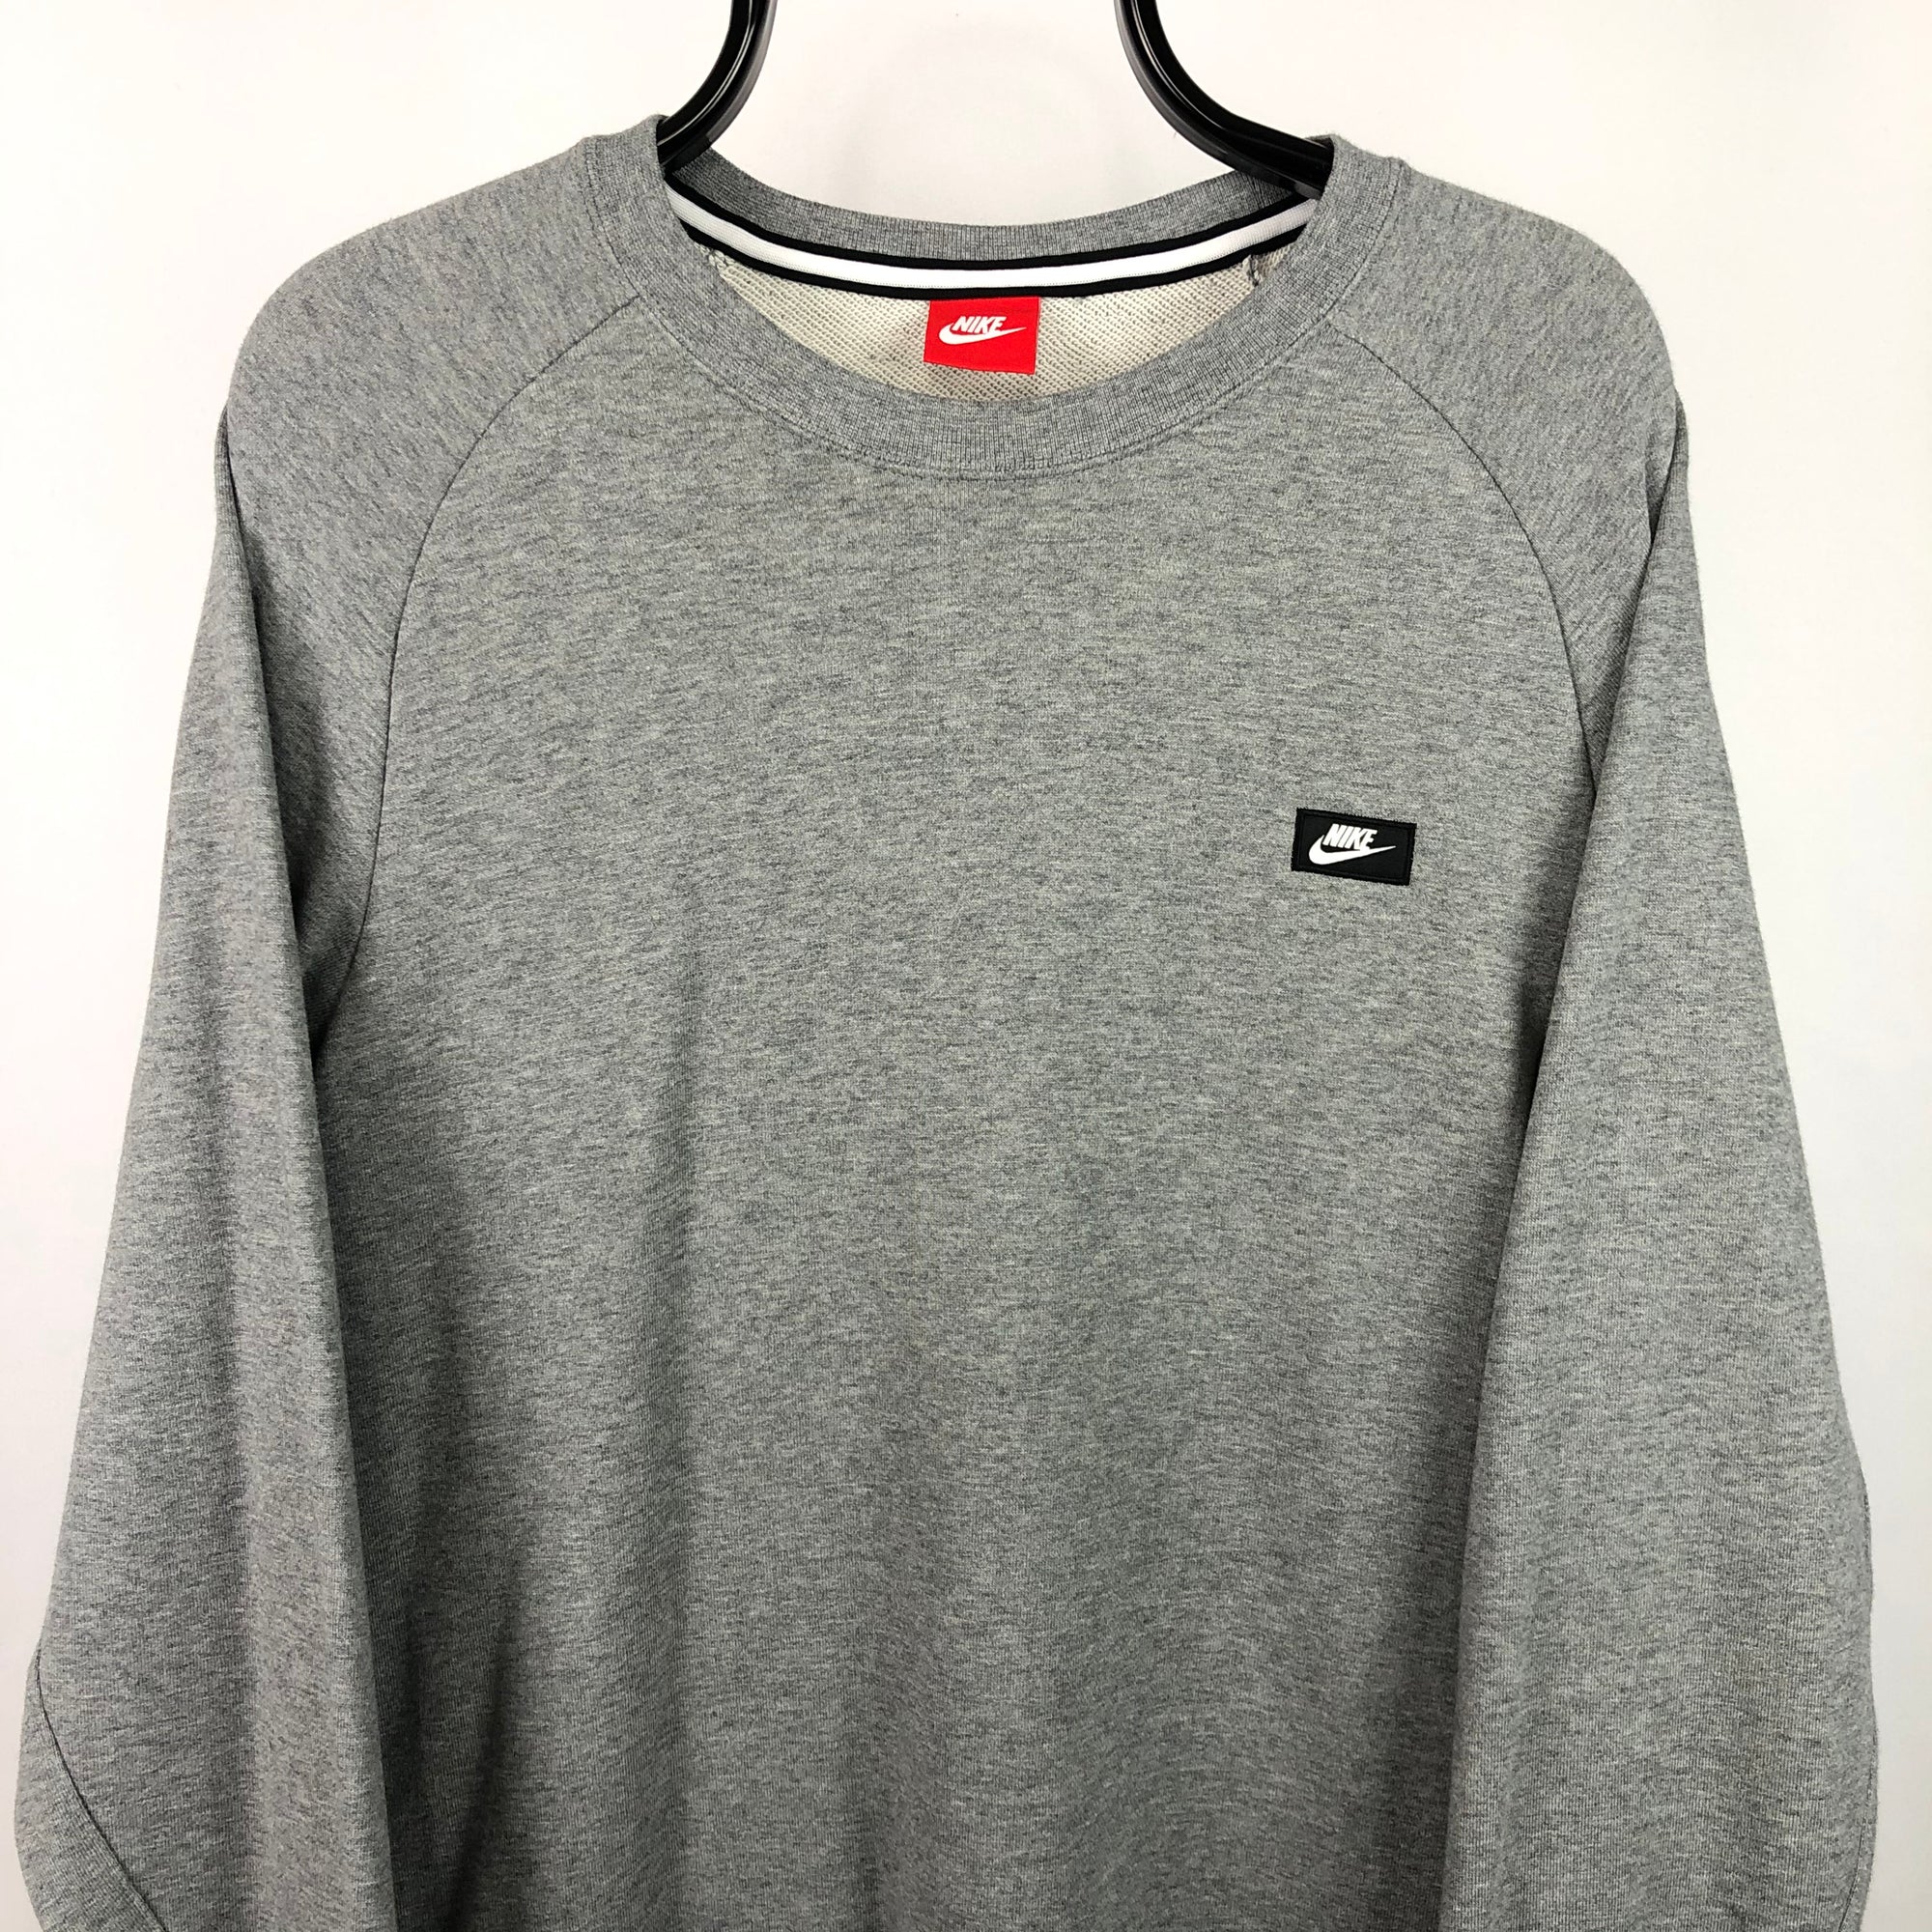 Nike Small Logo Sweatshirt in Grey - Men's Large/Women's XL